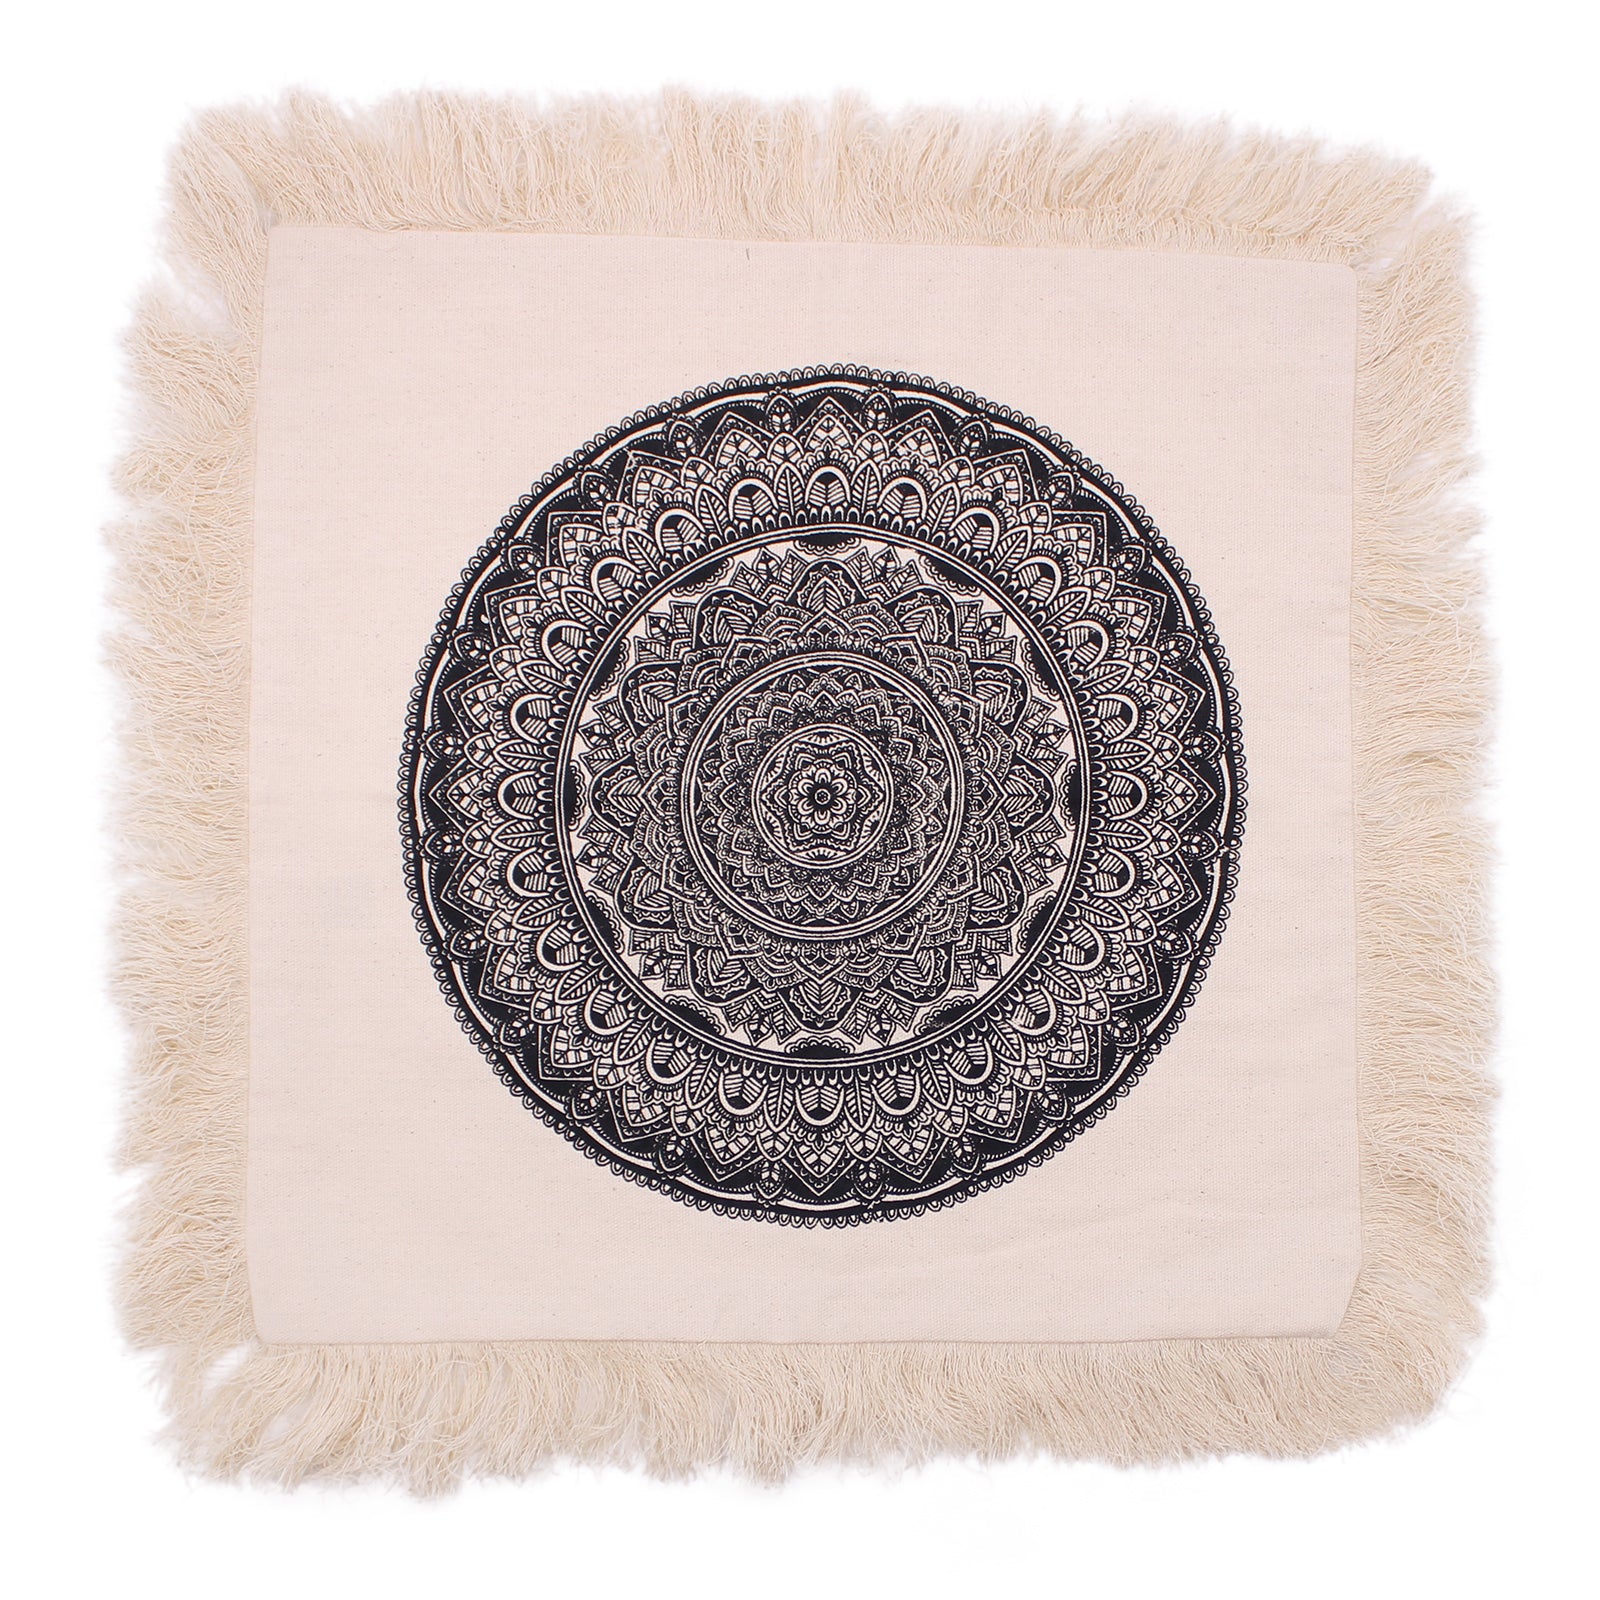 View Traditional Mandala Cushion Cover 45x45cm black information